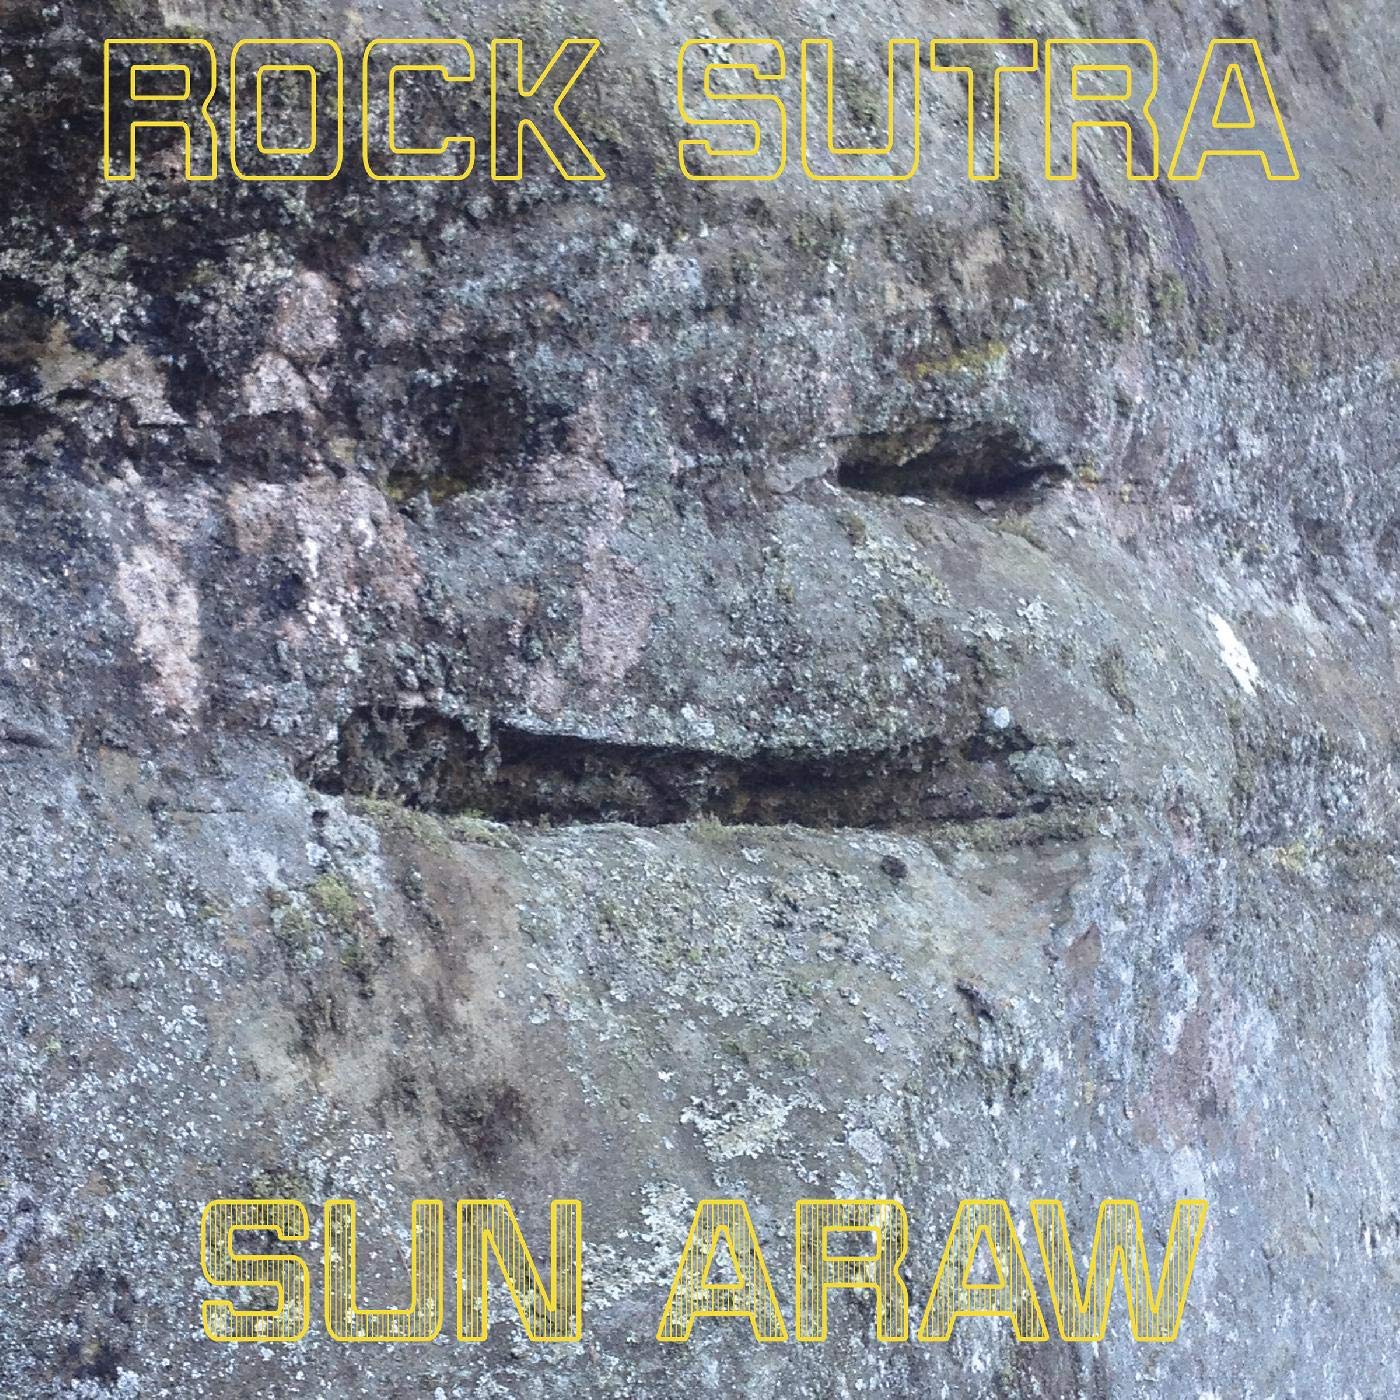 Sun Araw: Rock Sutra